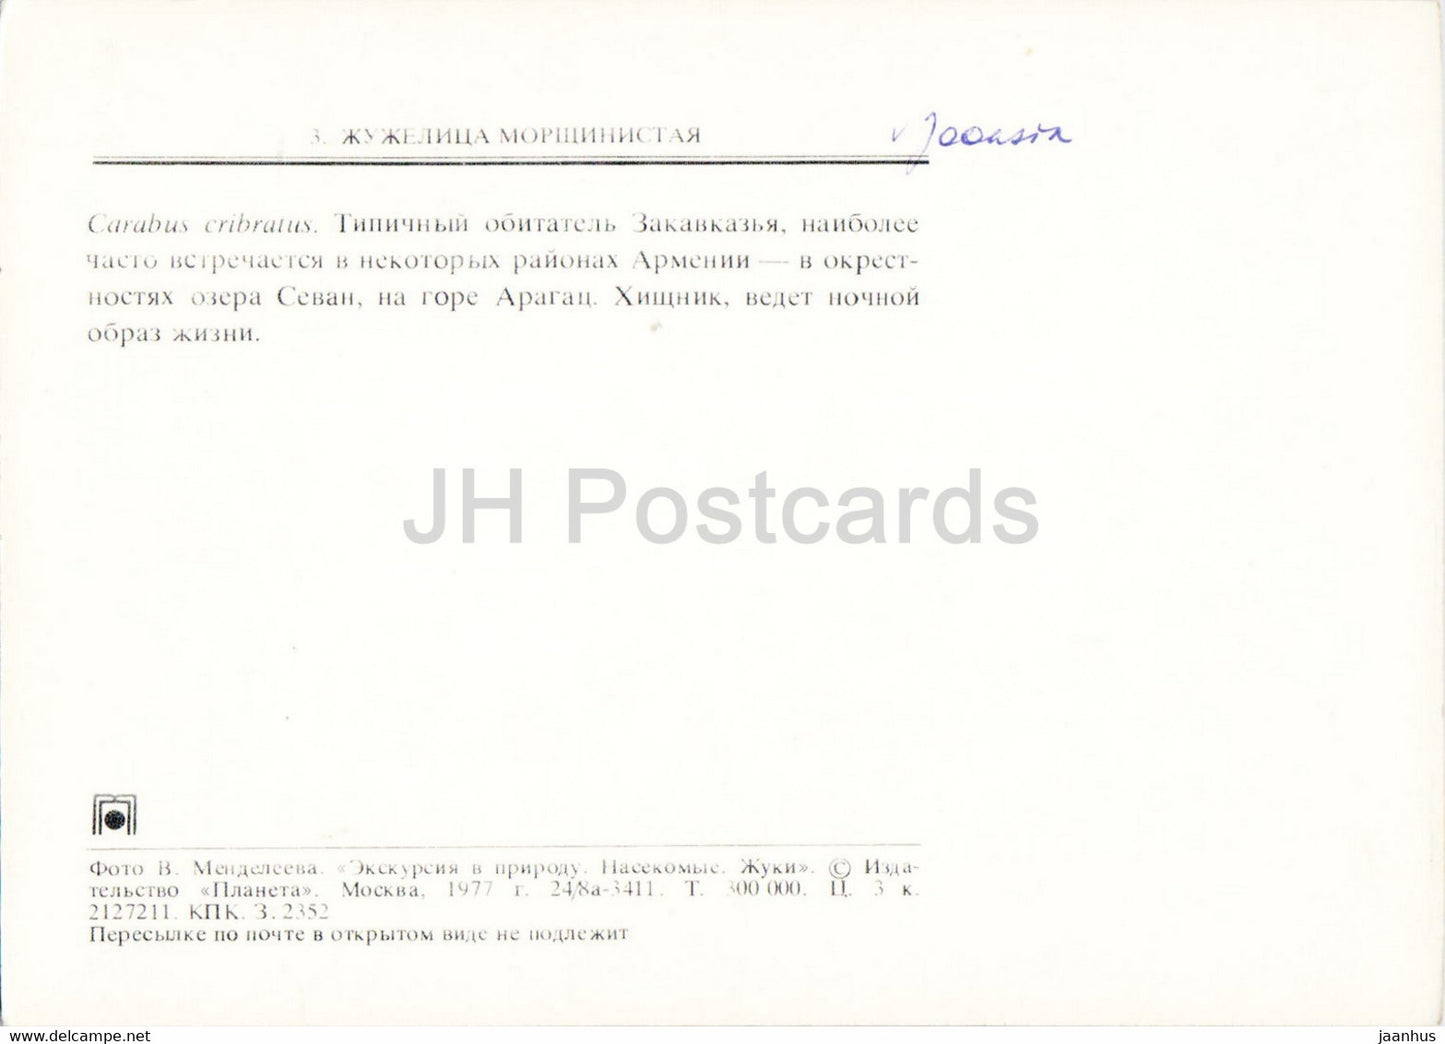 Carabus cribratus - insects - 1977 - Russia USSR - unused